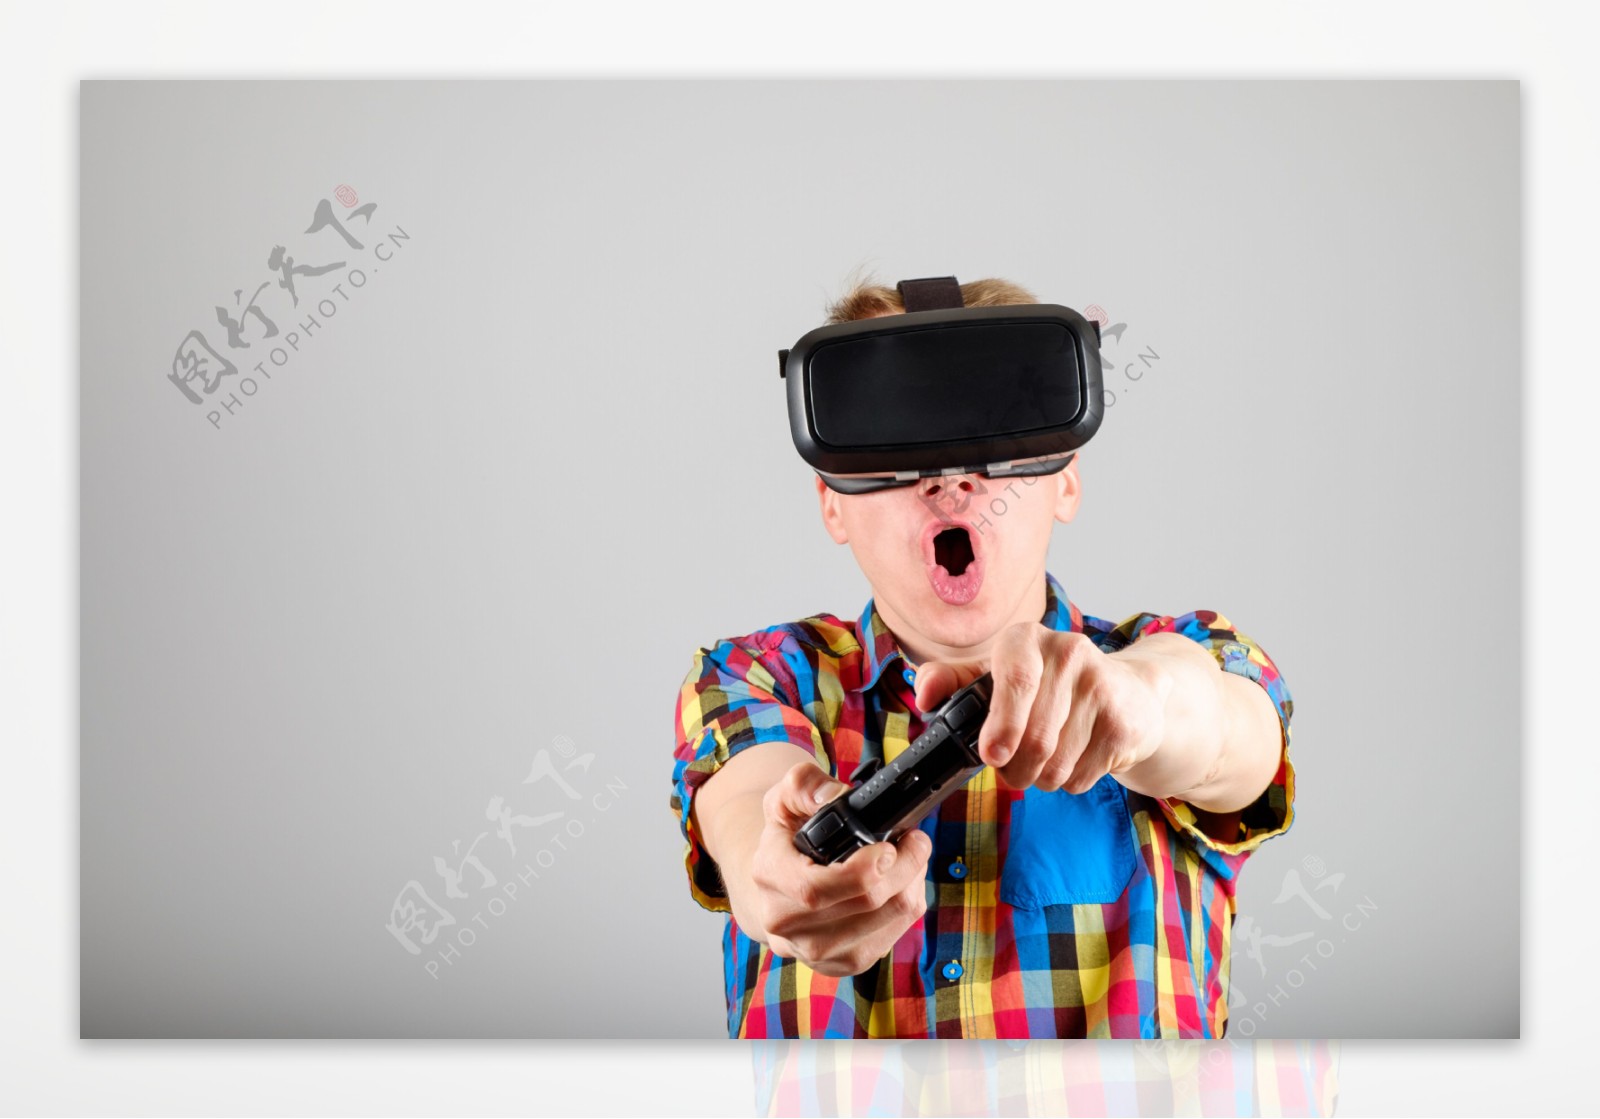 VR穿戴设备